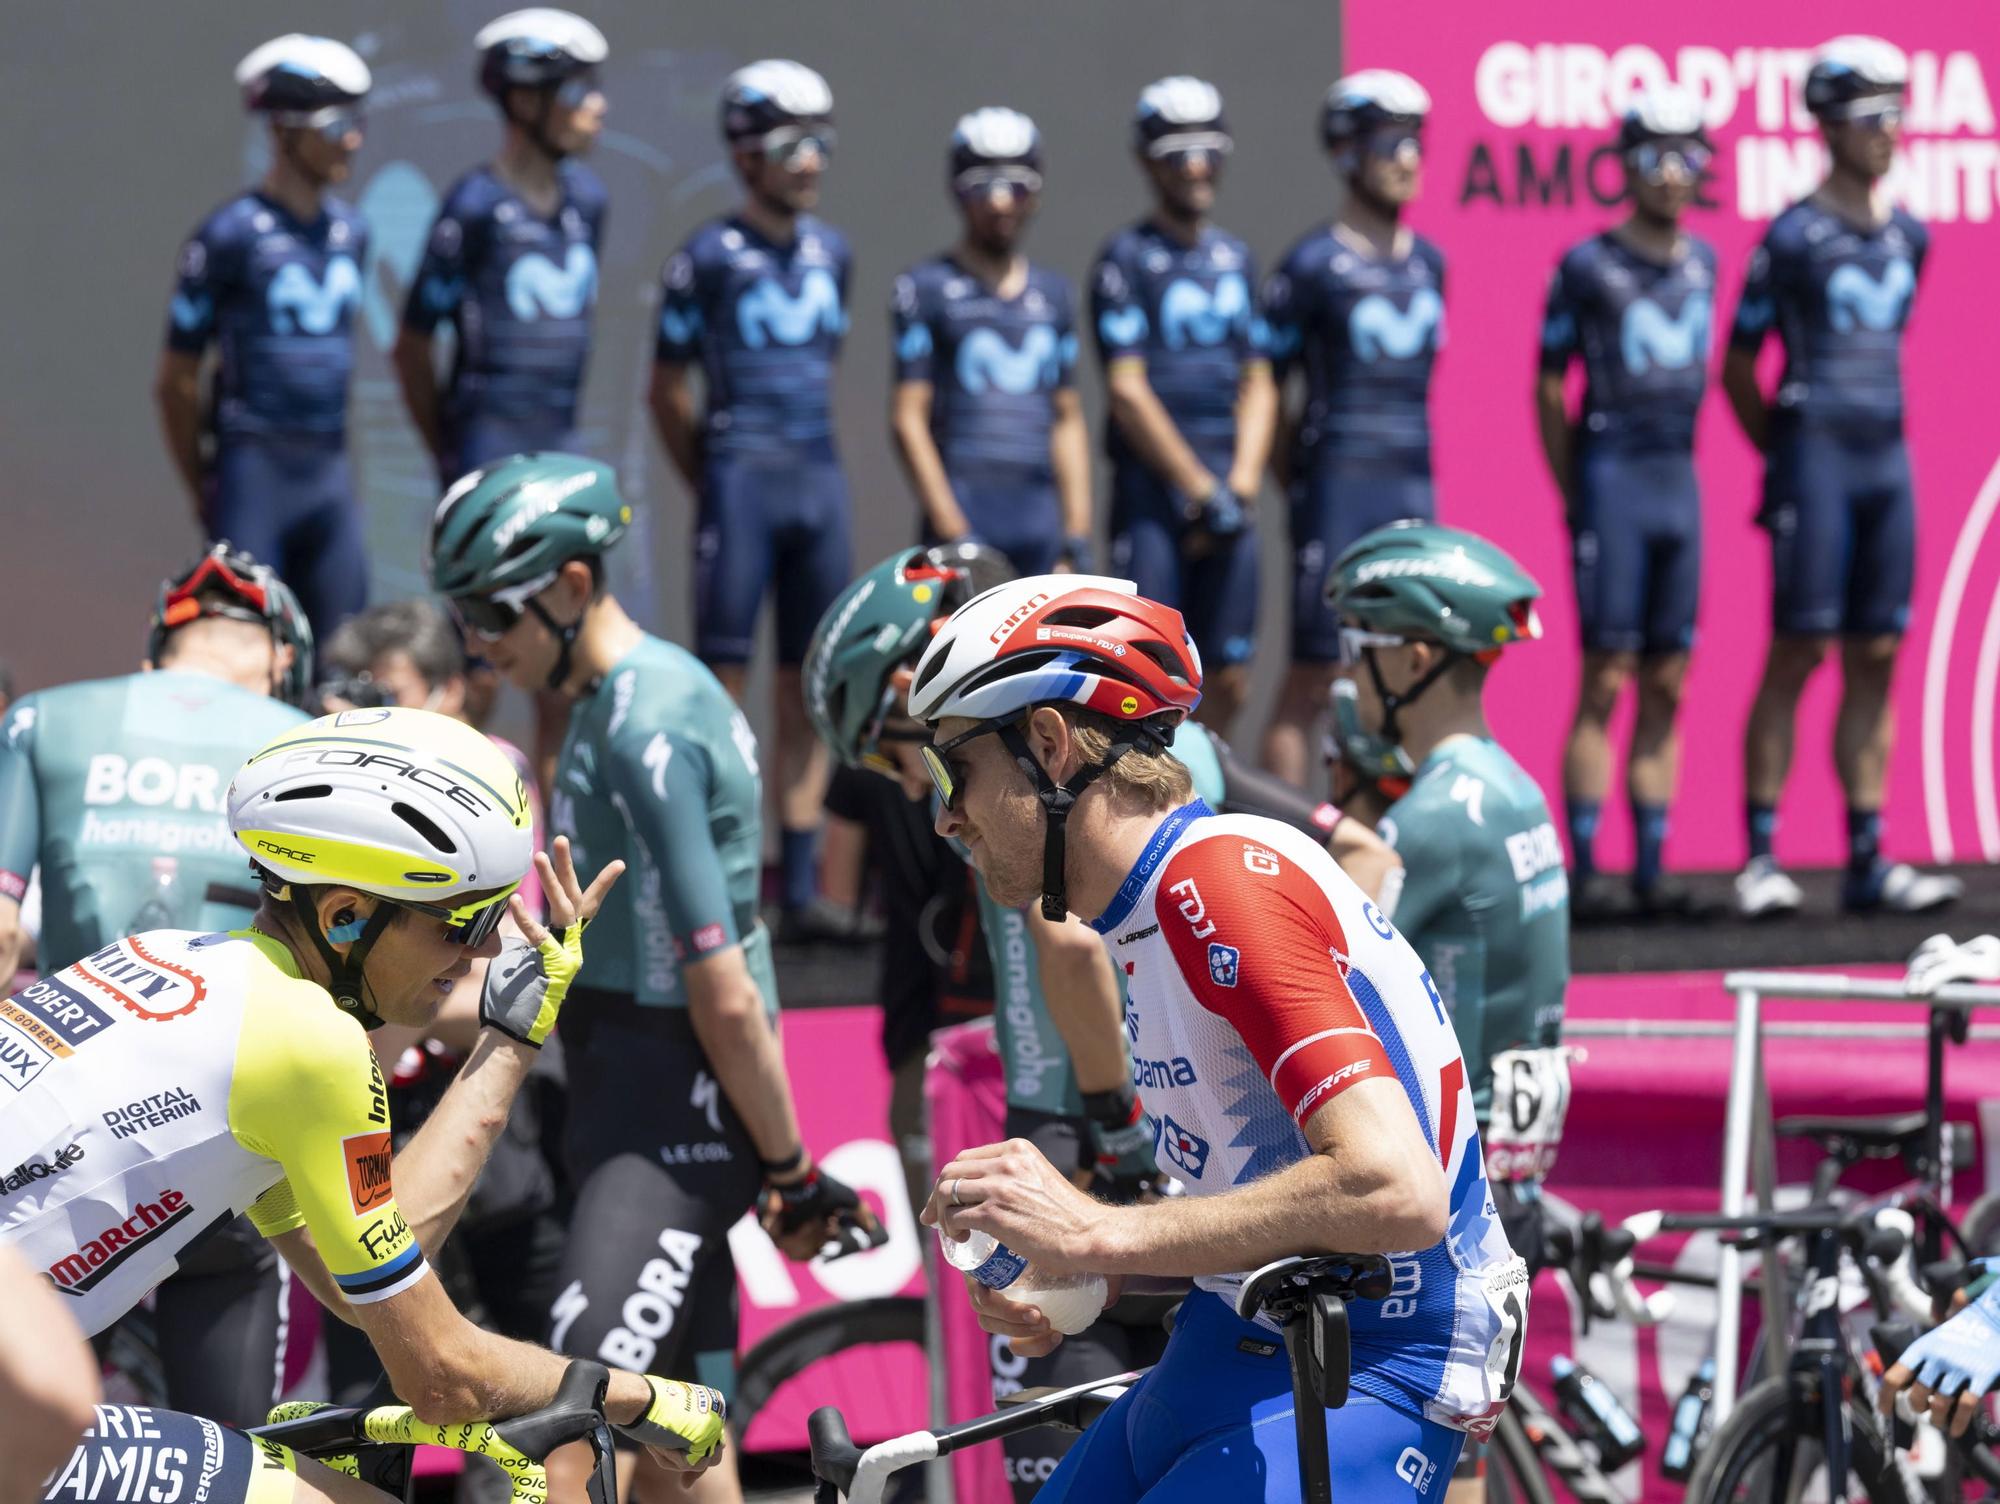 Giro d'Italia - 6th stage